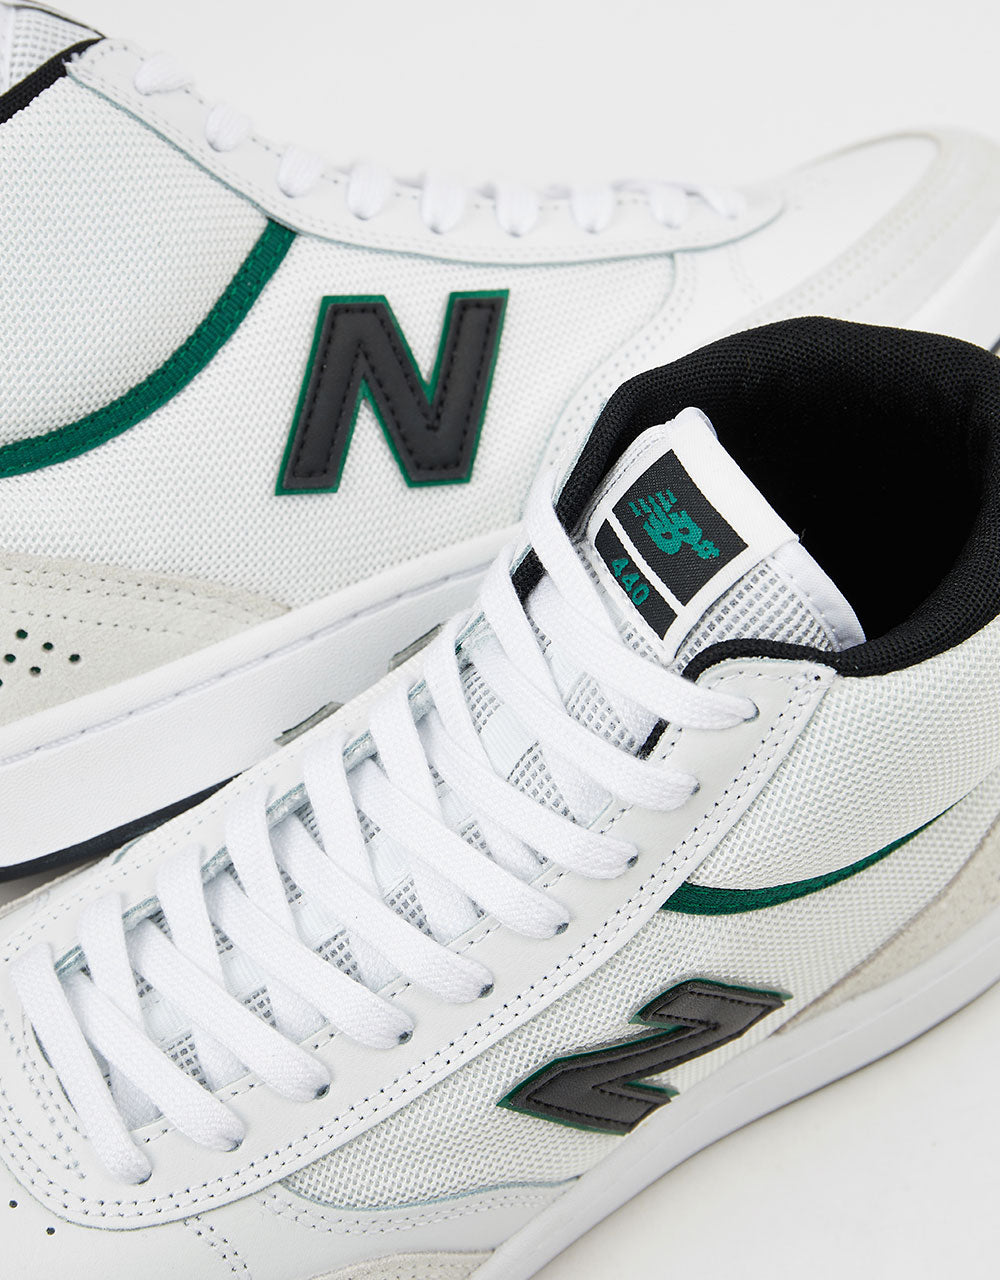 New Balance Numeric 440 Hi Skate Shoes - White/Black